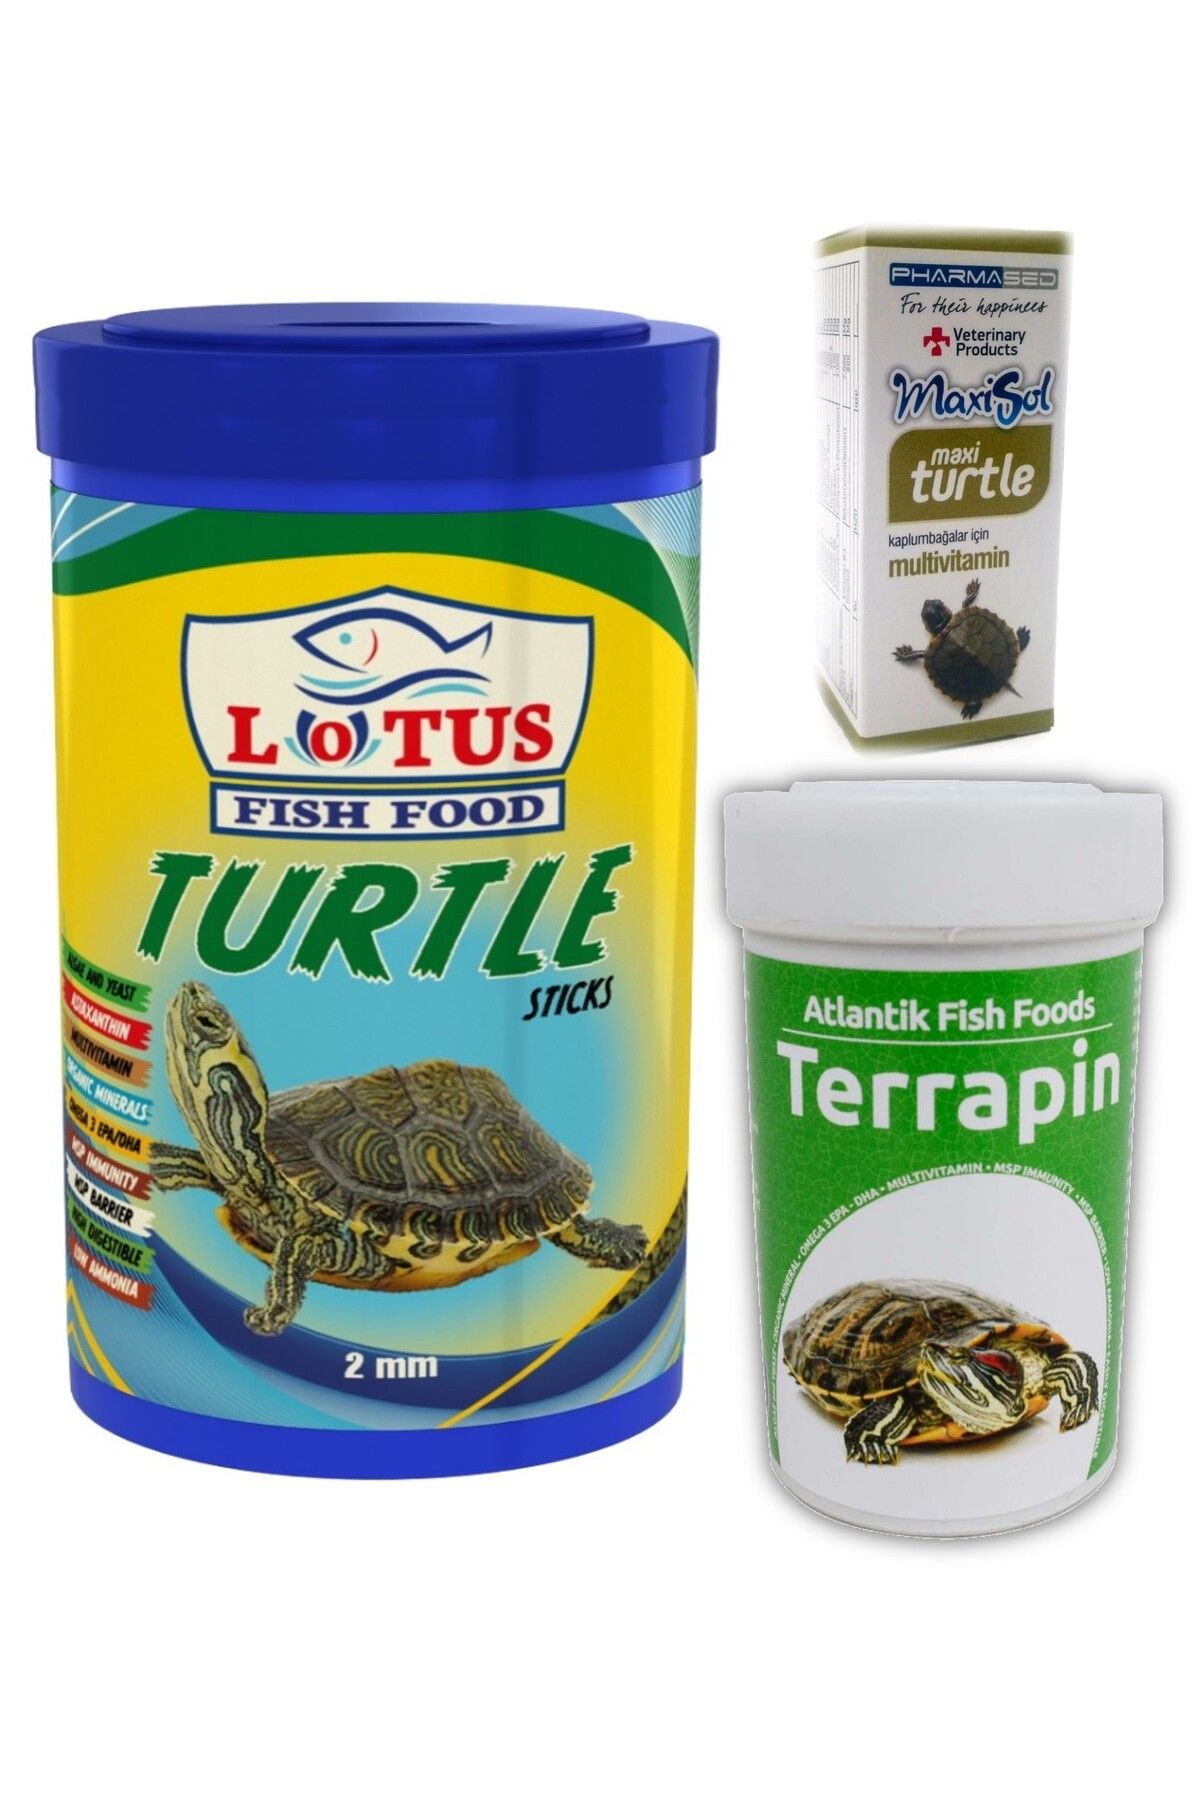 Lotus Kaplumbağa Yemi 1000ml, terrapin 100 ml Turtle Sticks, Multivitamin Seti